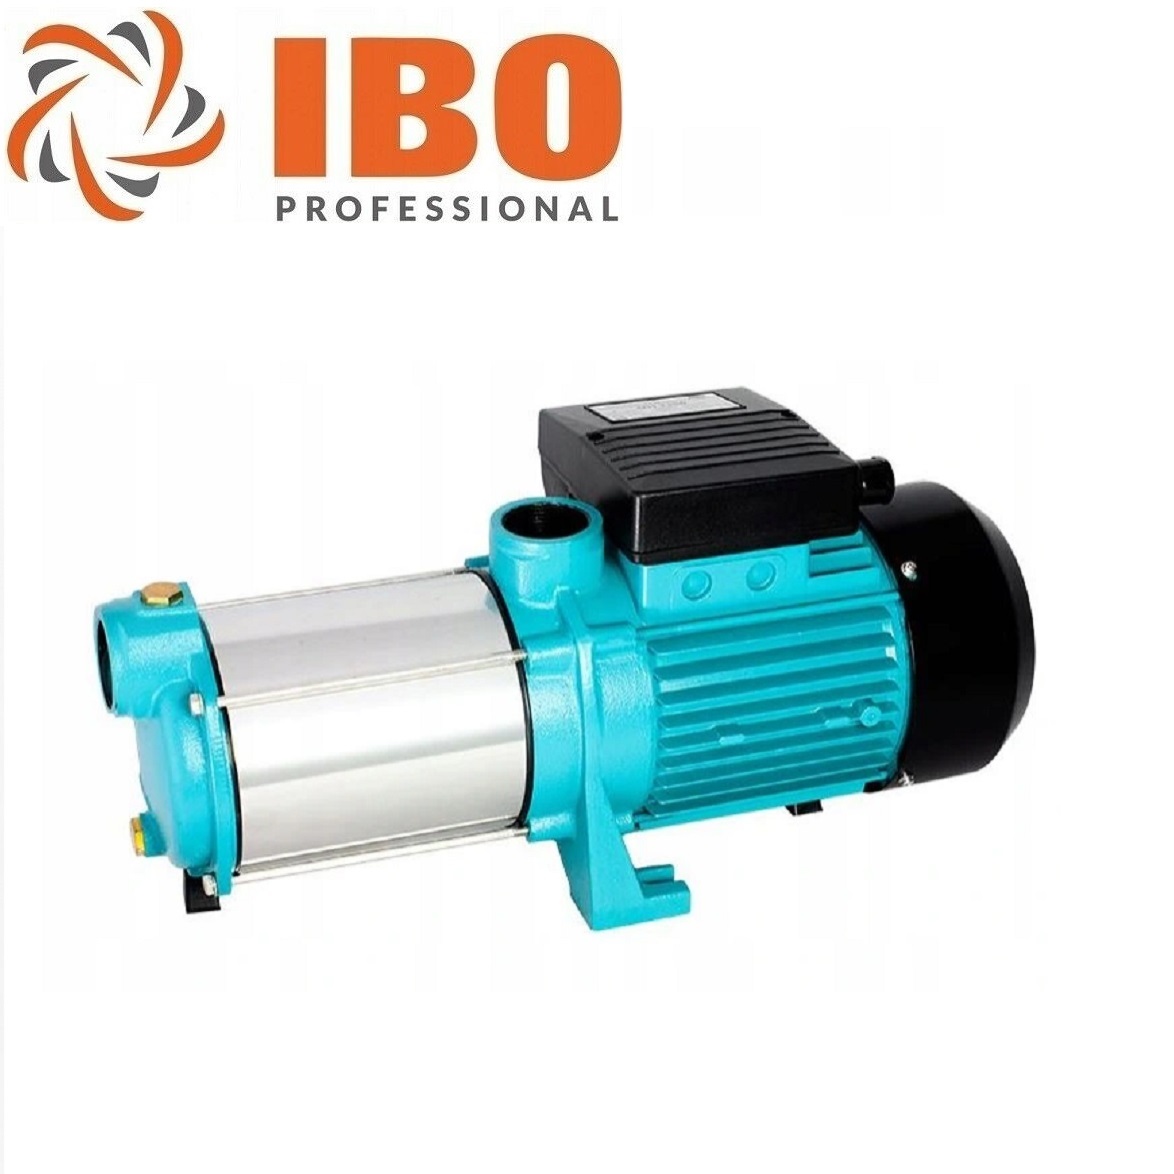 IBO Hochdruck Gartenpumpe 1800 Watt - 6000 L/h - 8 bar